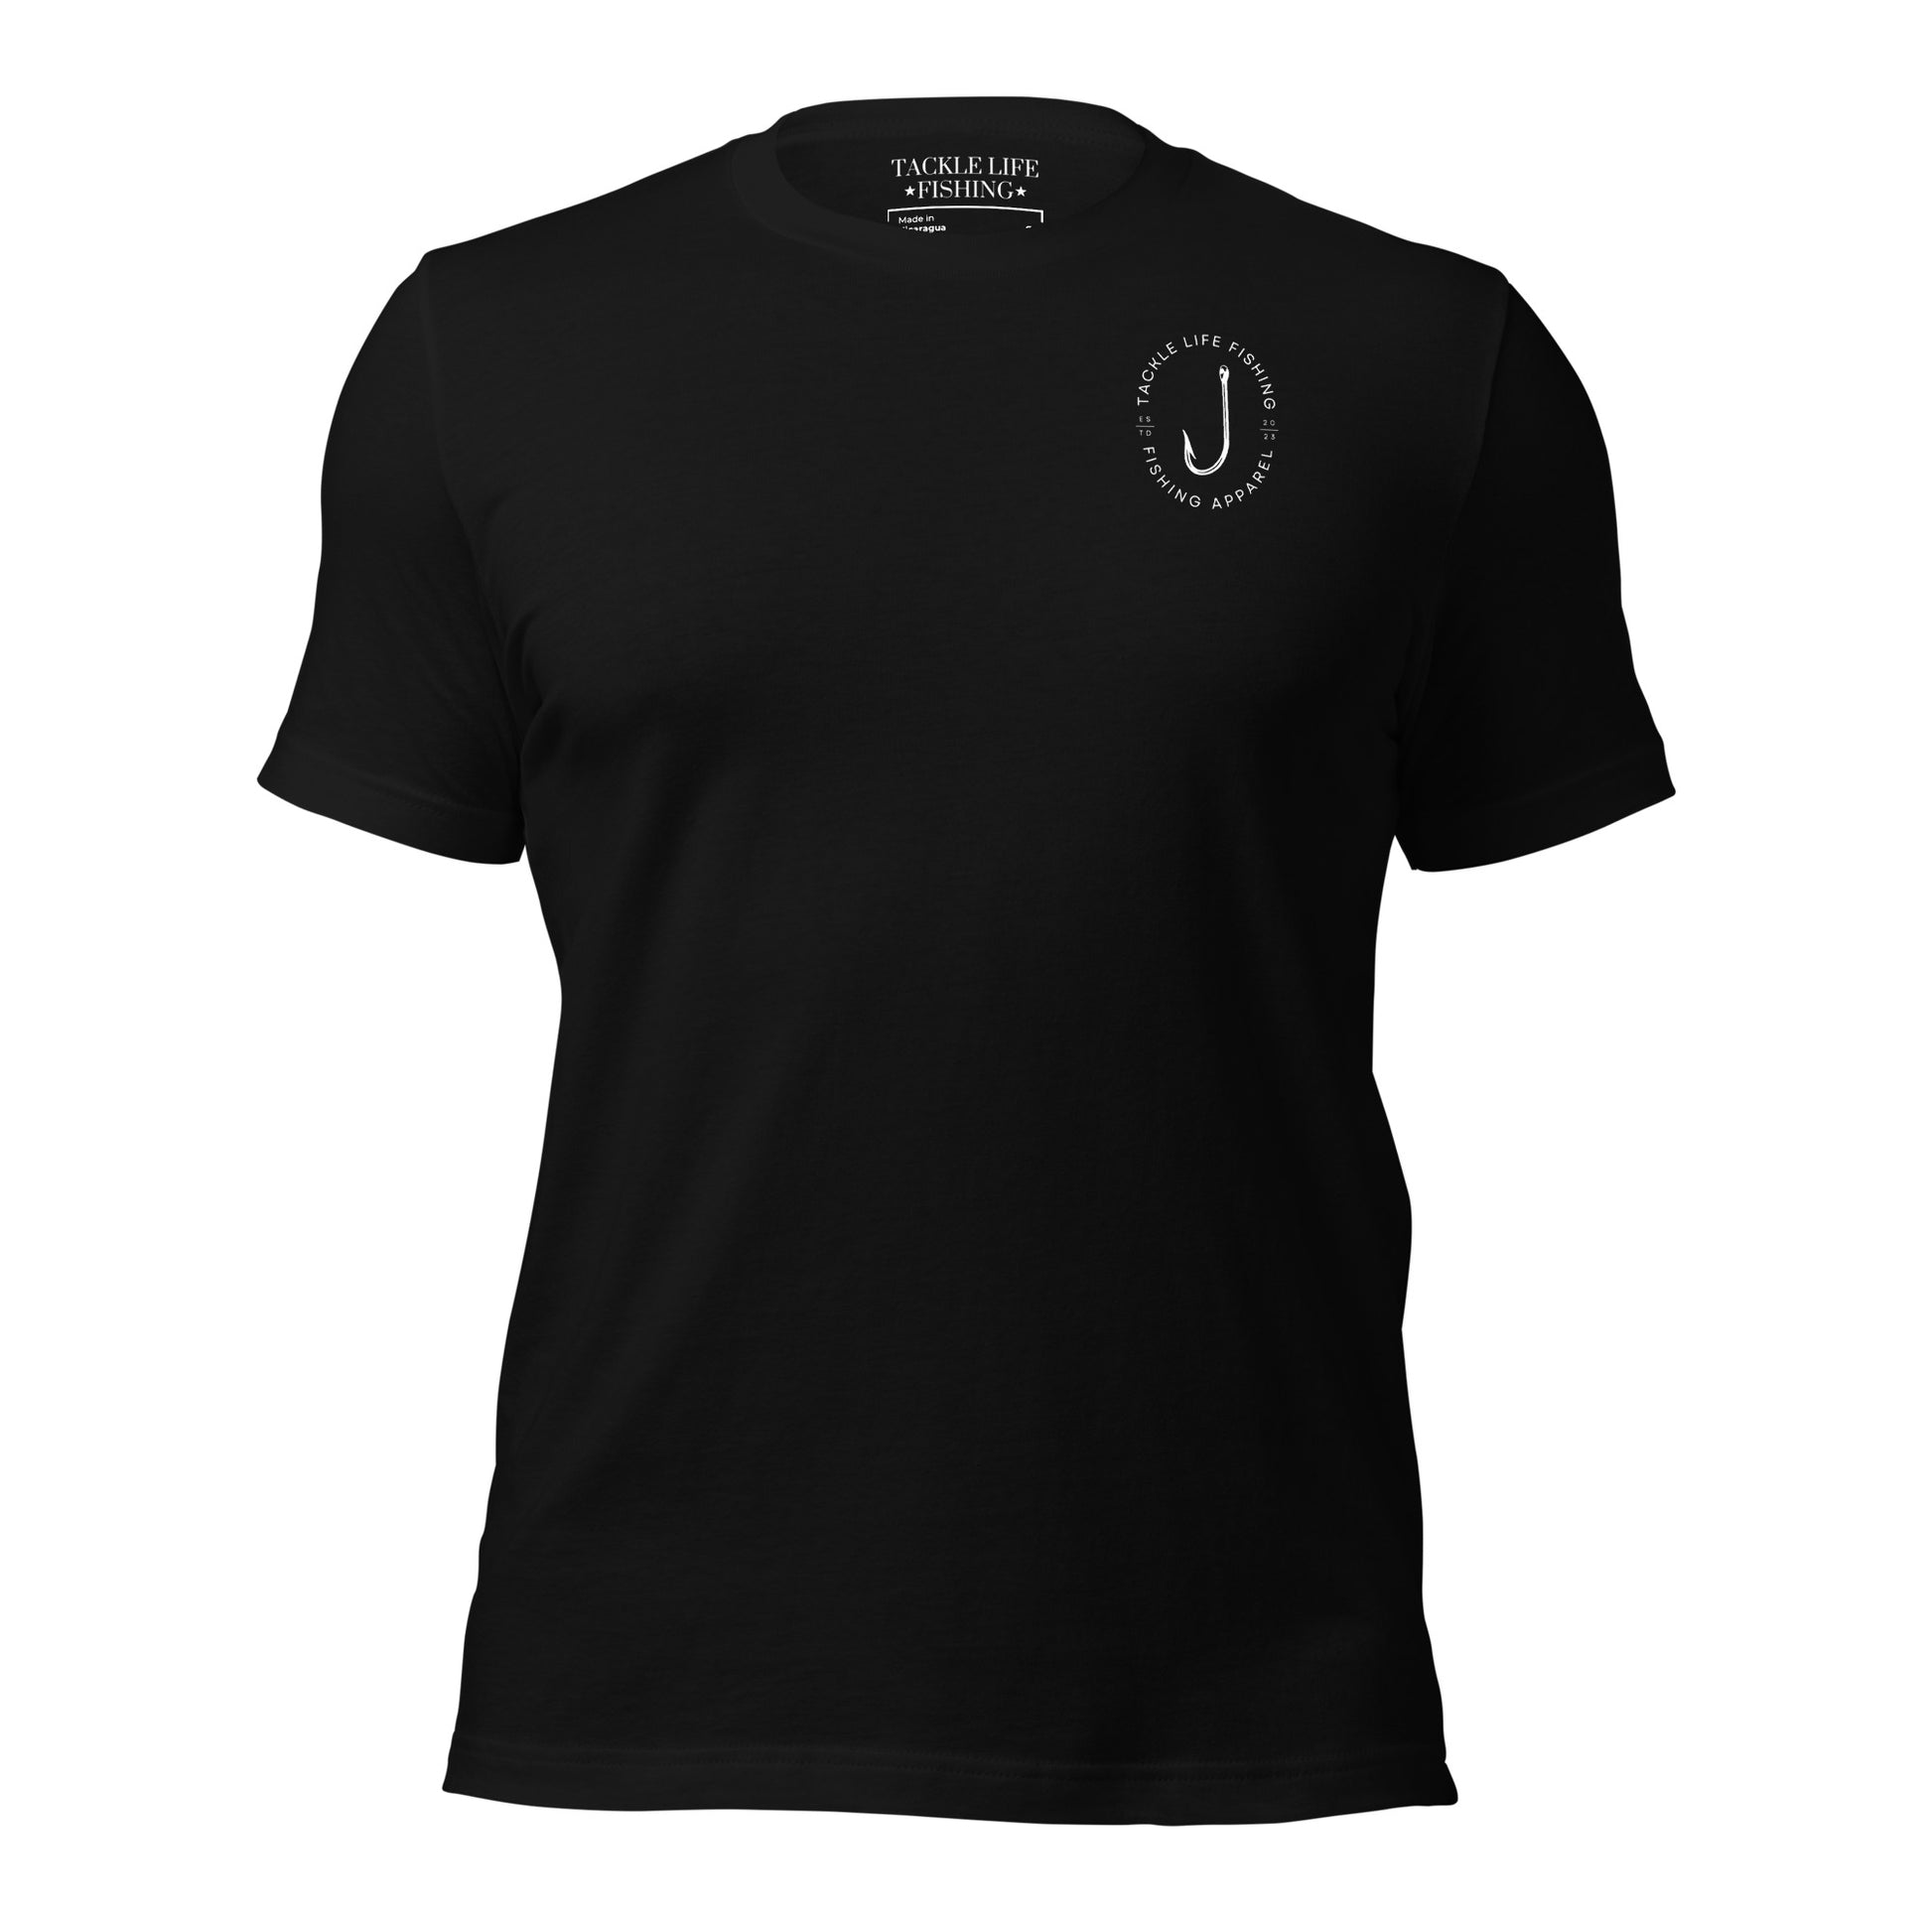 Fishman Brand T-Shirt, black, XL - shop-fishman